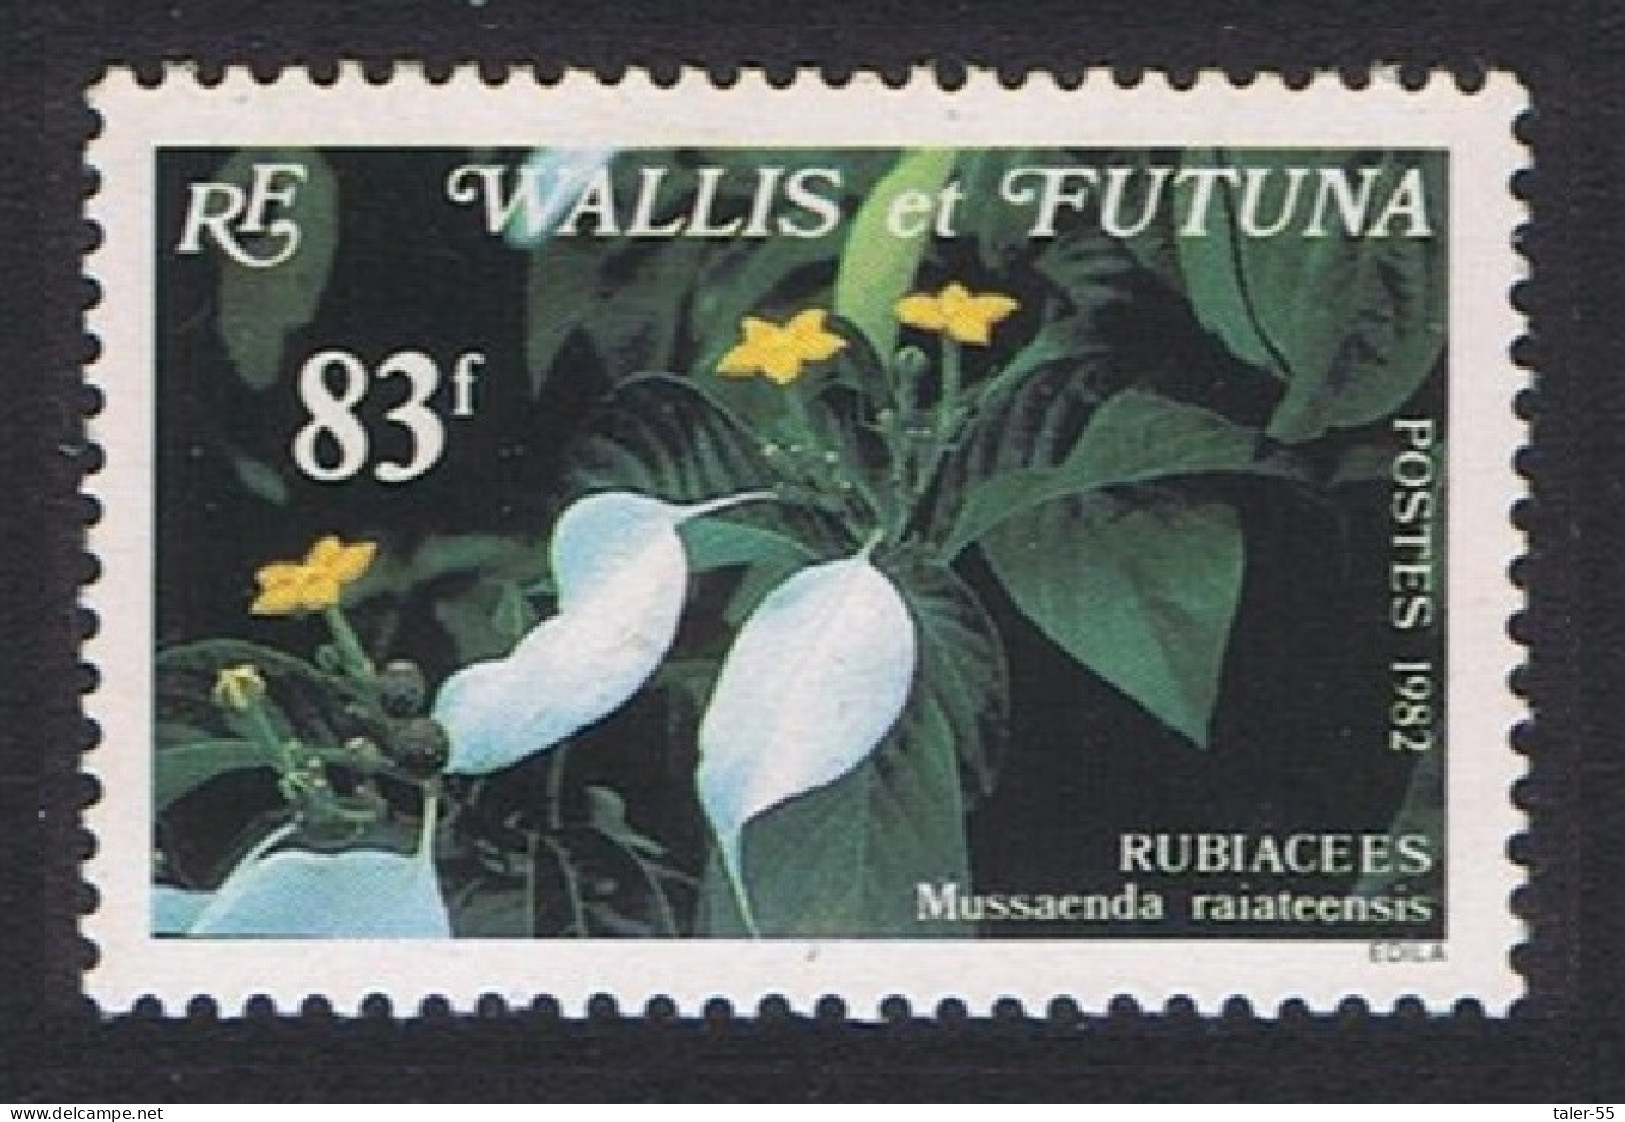 Wallis And Futuna Orchids Mussaenda Raiateensis 83f 1982 MNH SG#399 Sc#286 - Ungebraucht